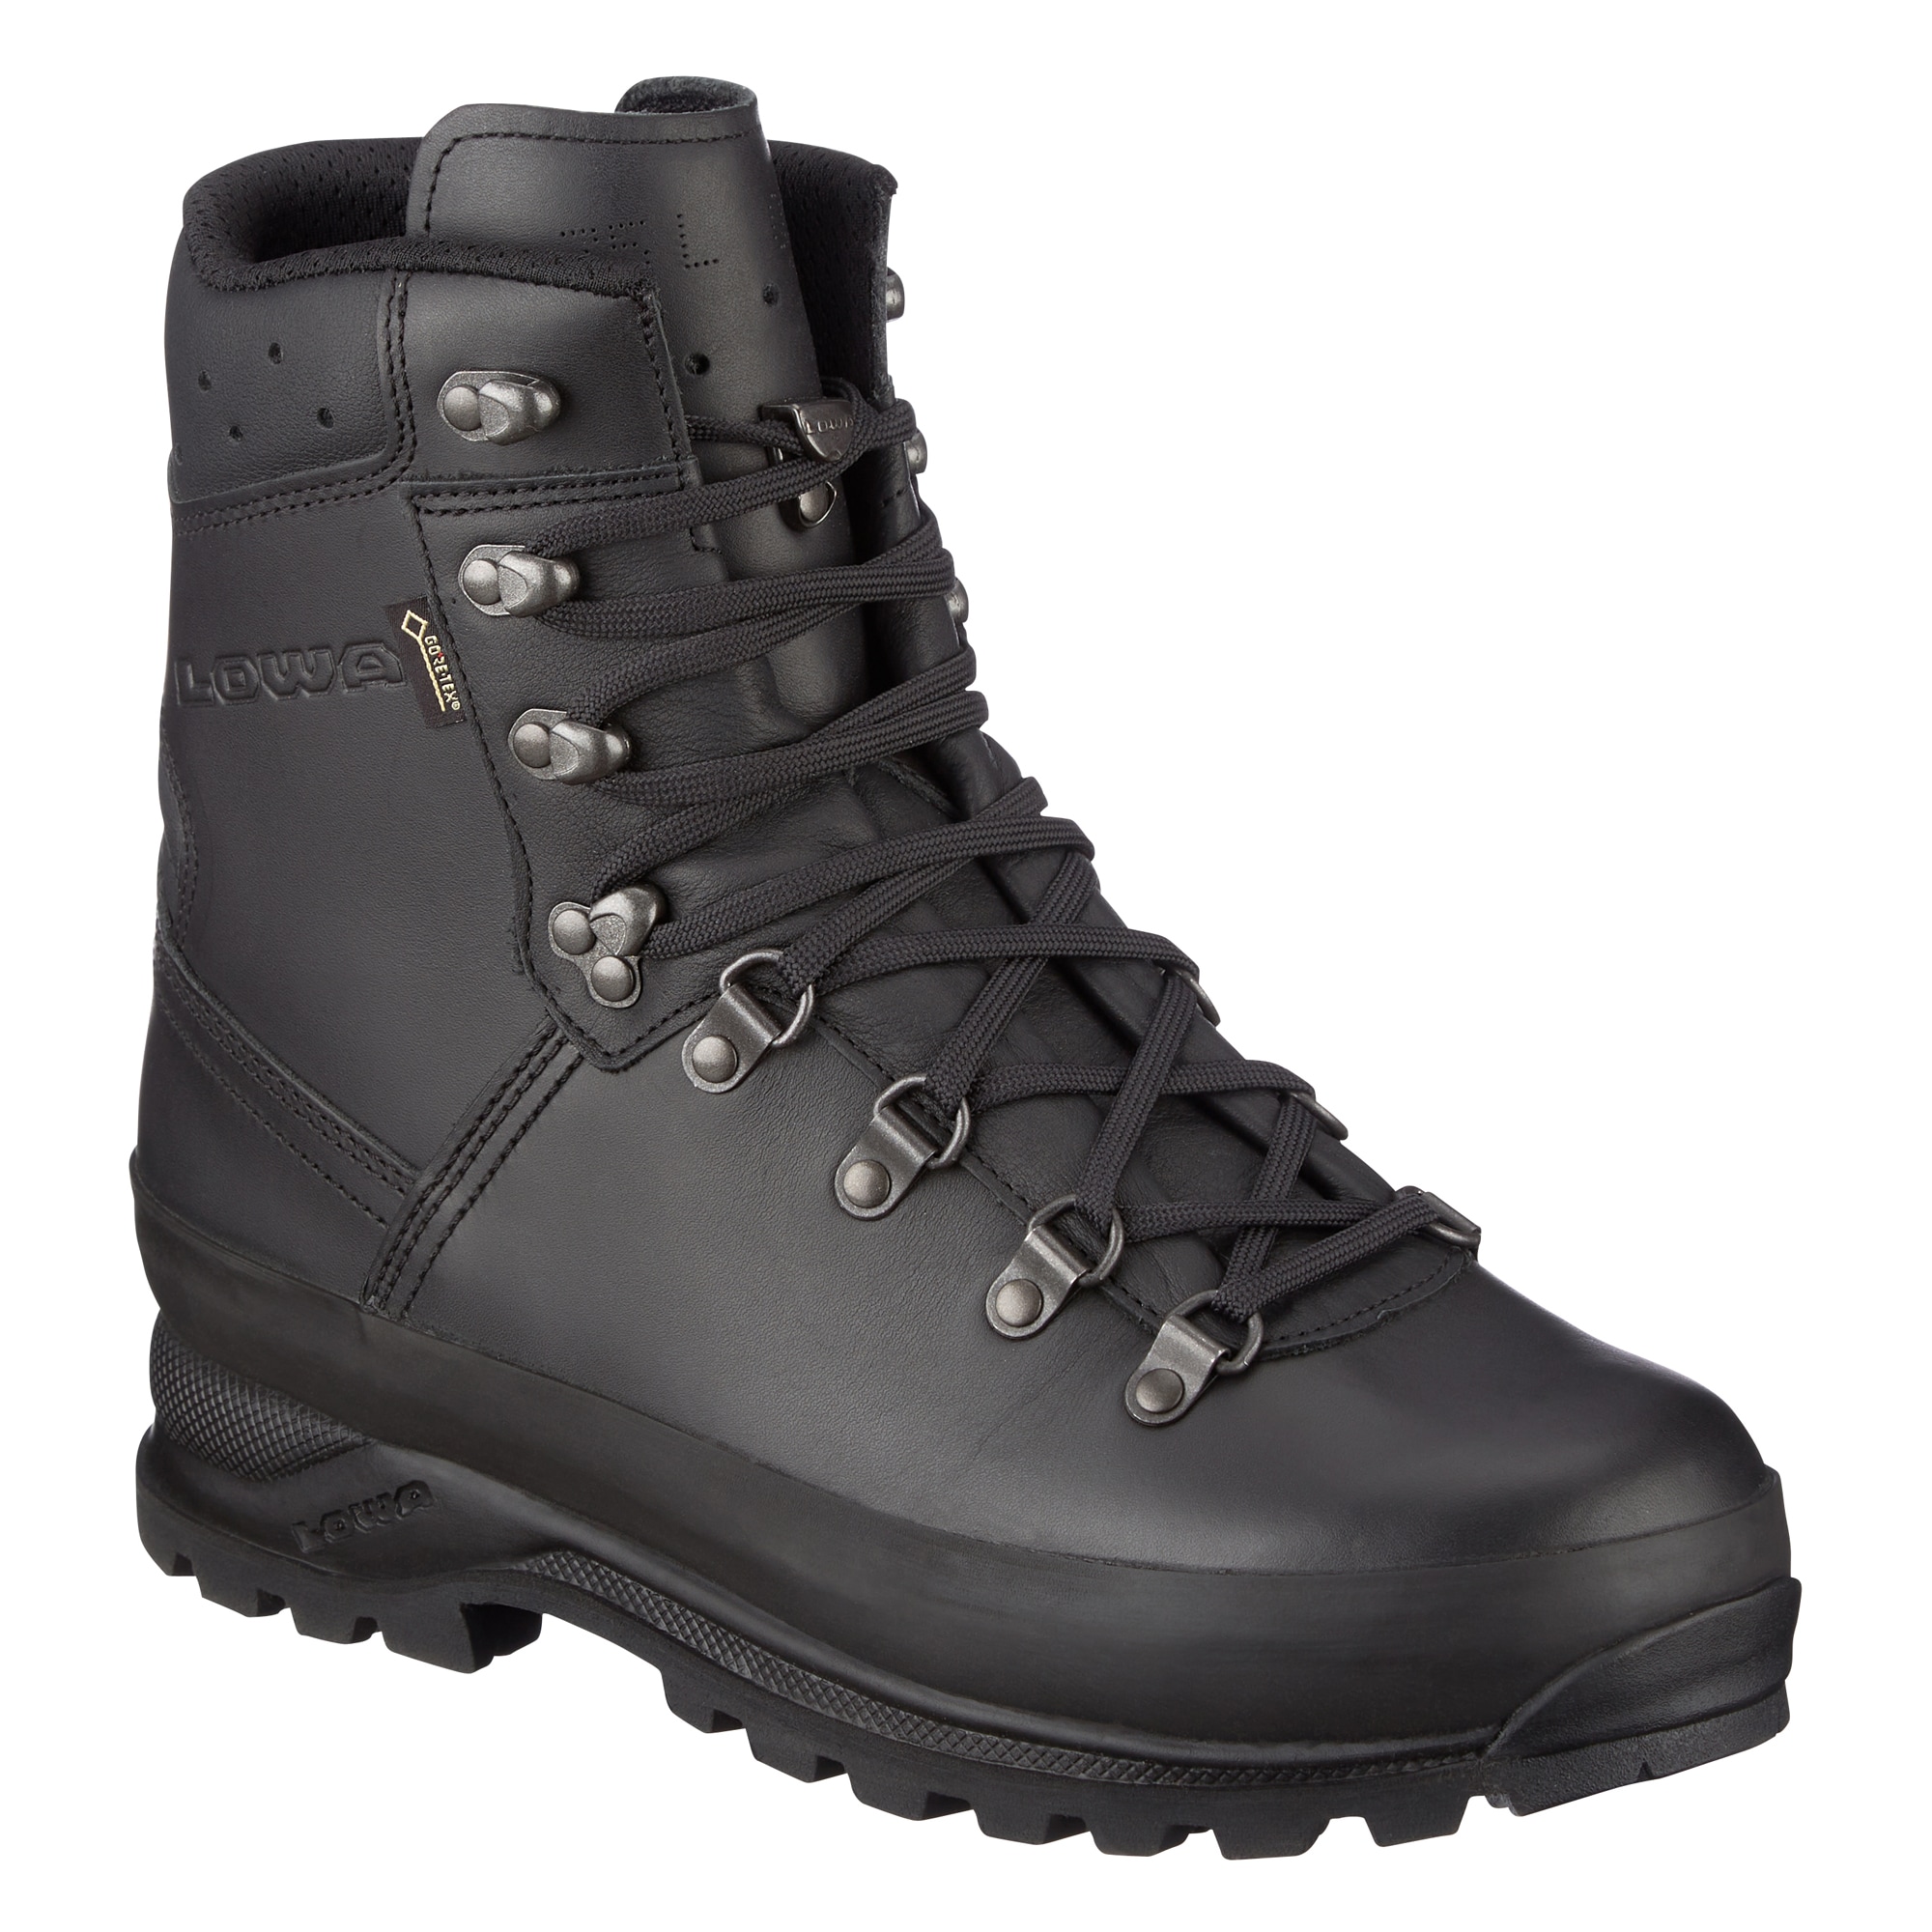 lowa mountain boot gtx purchase 8370c c4450